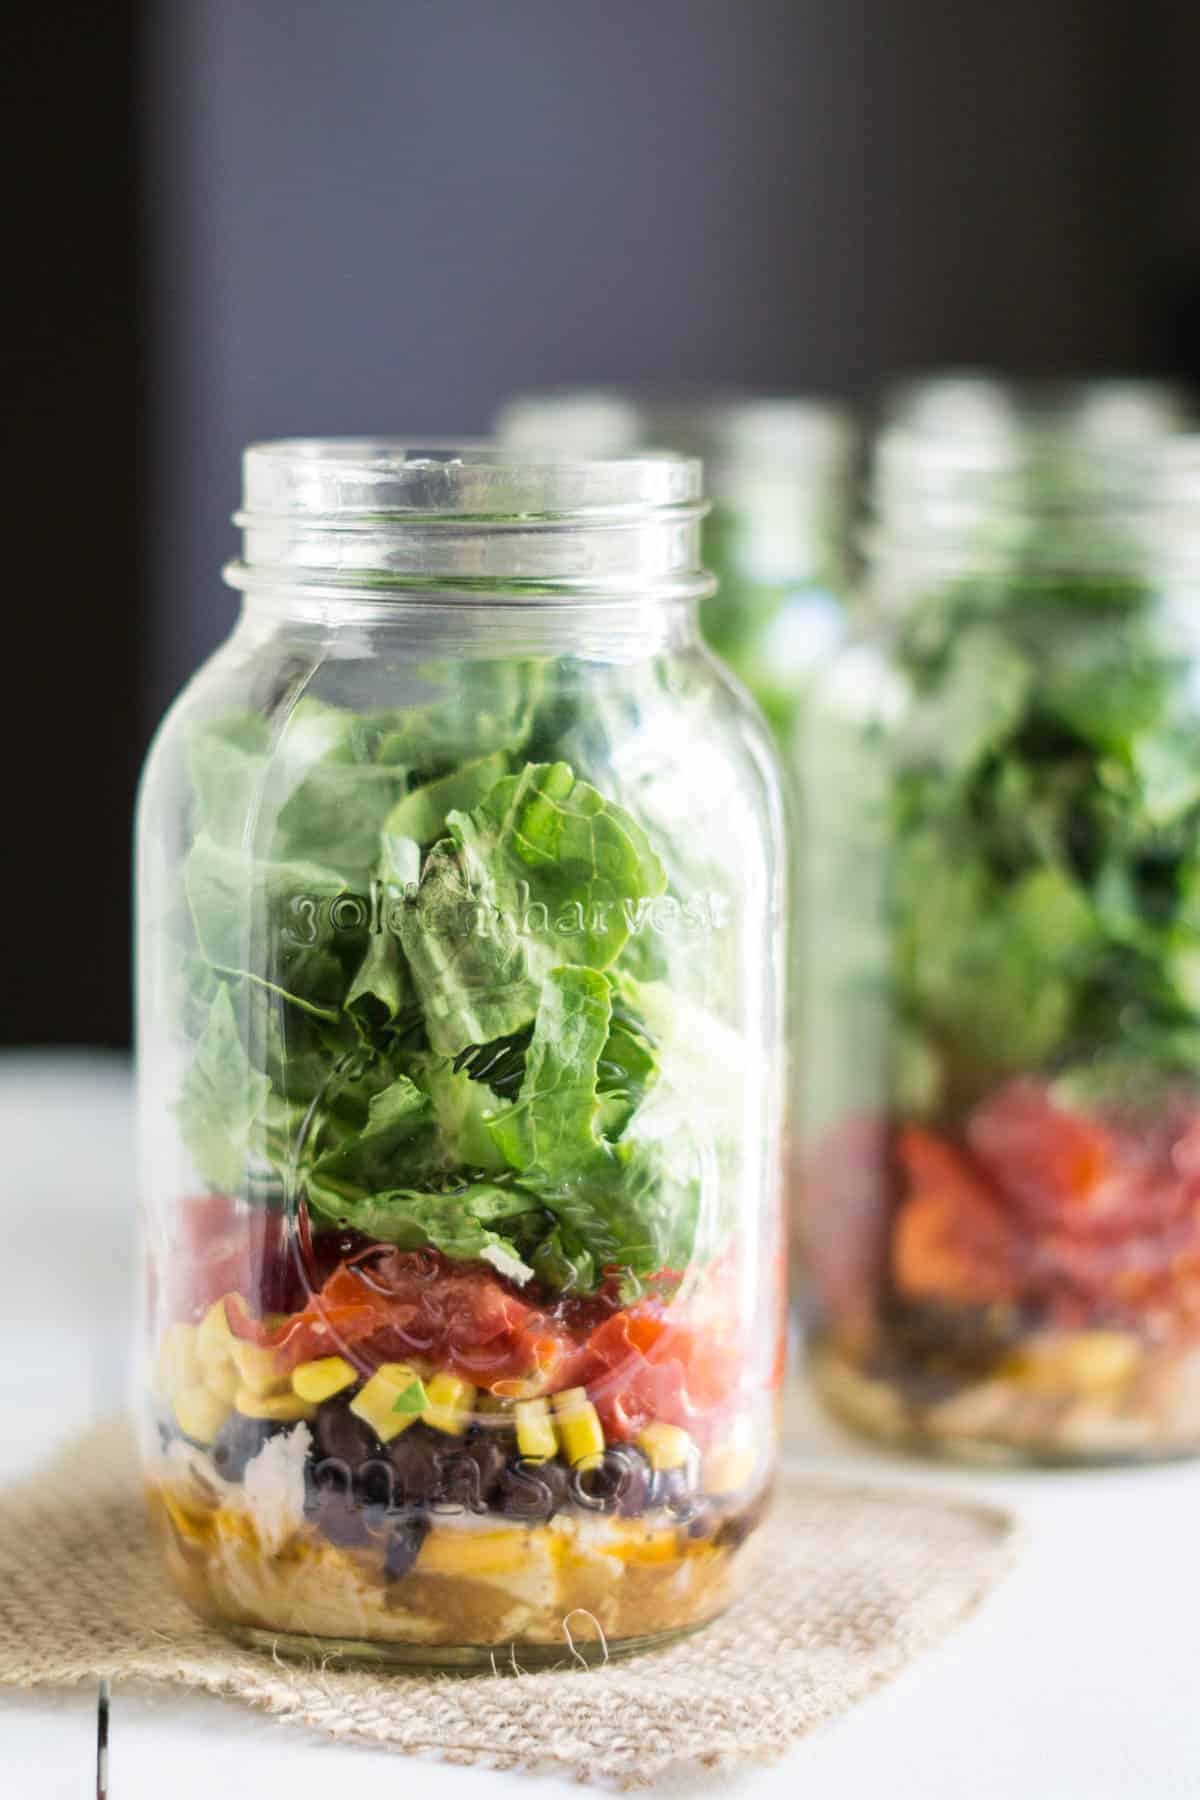 mexicana salad in a jar